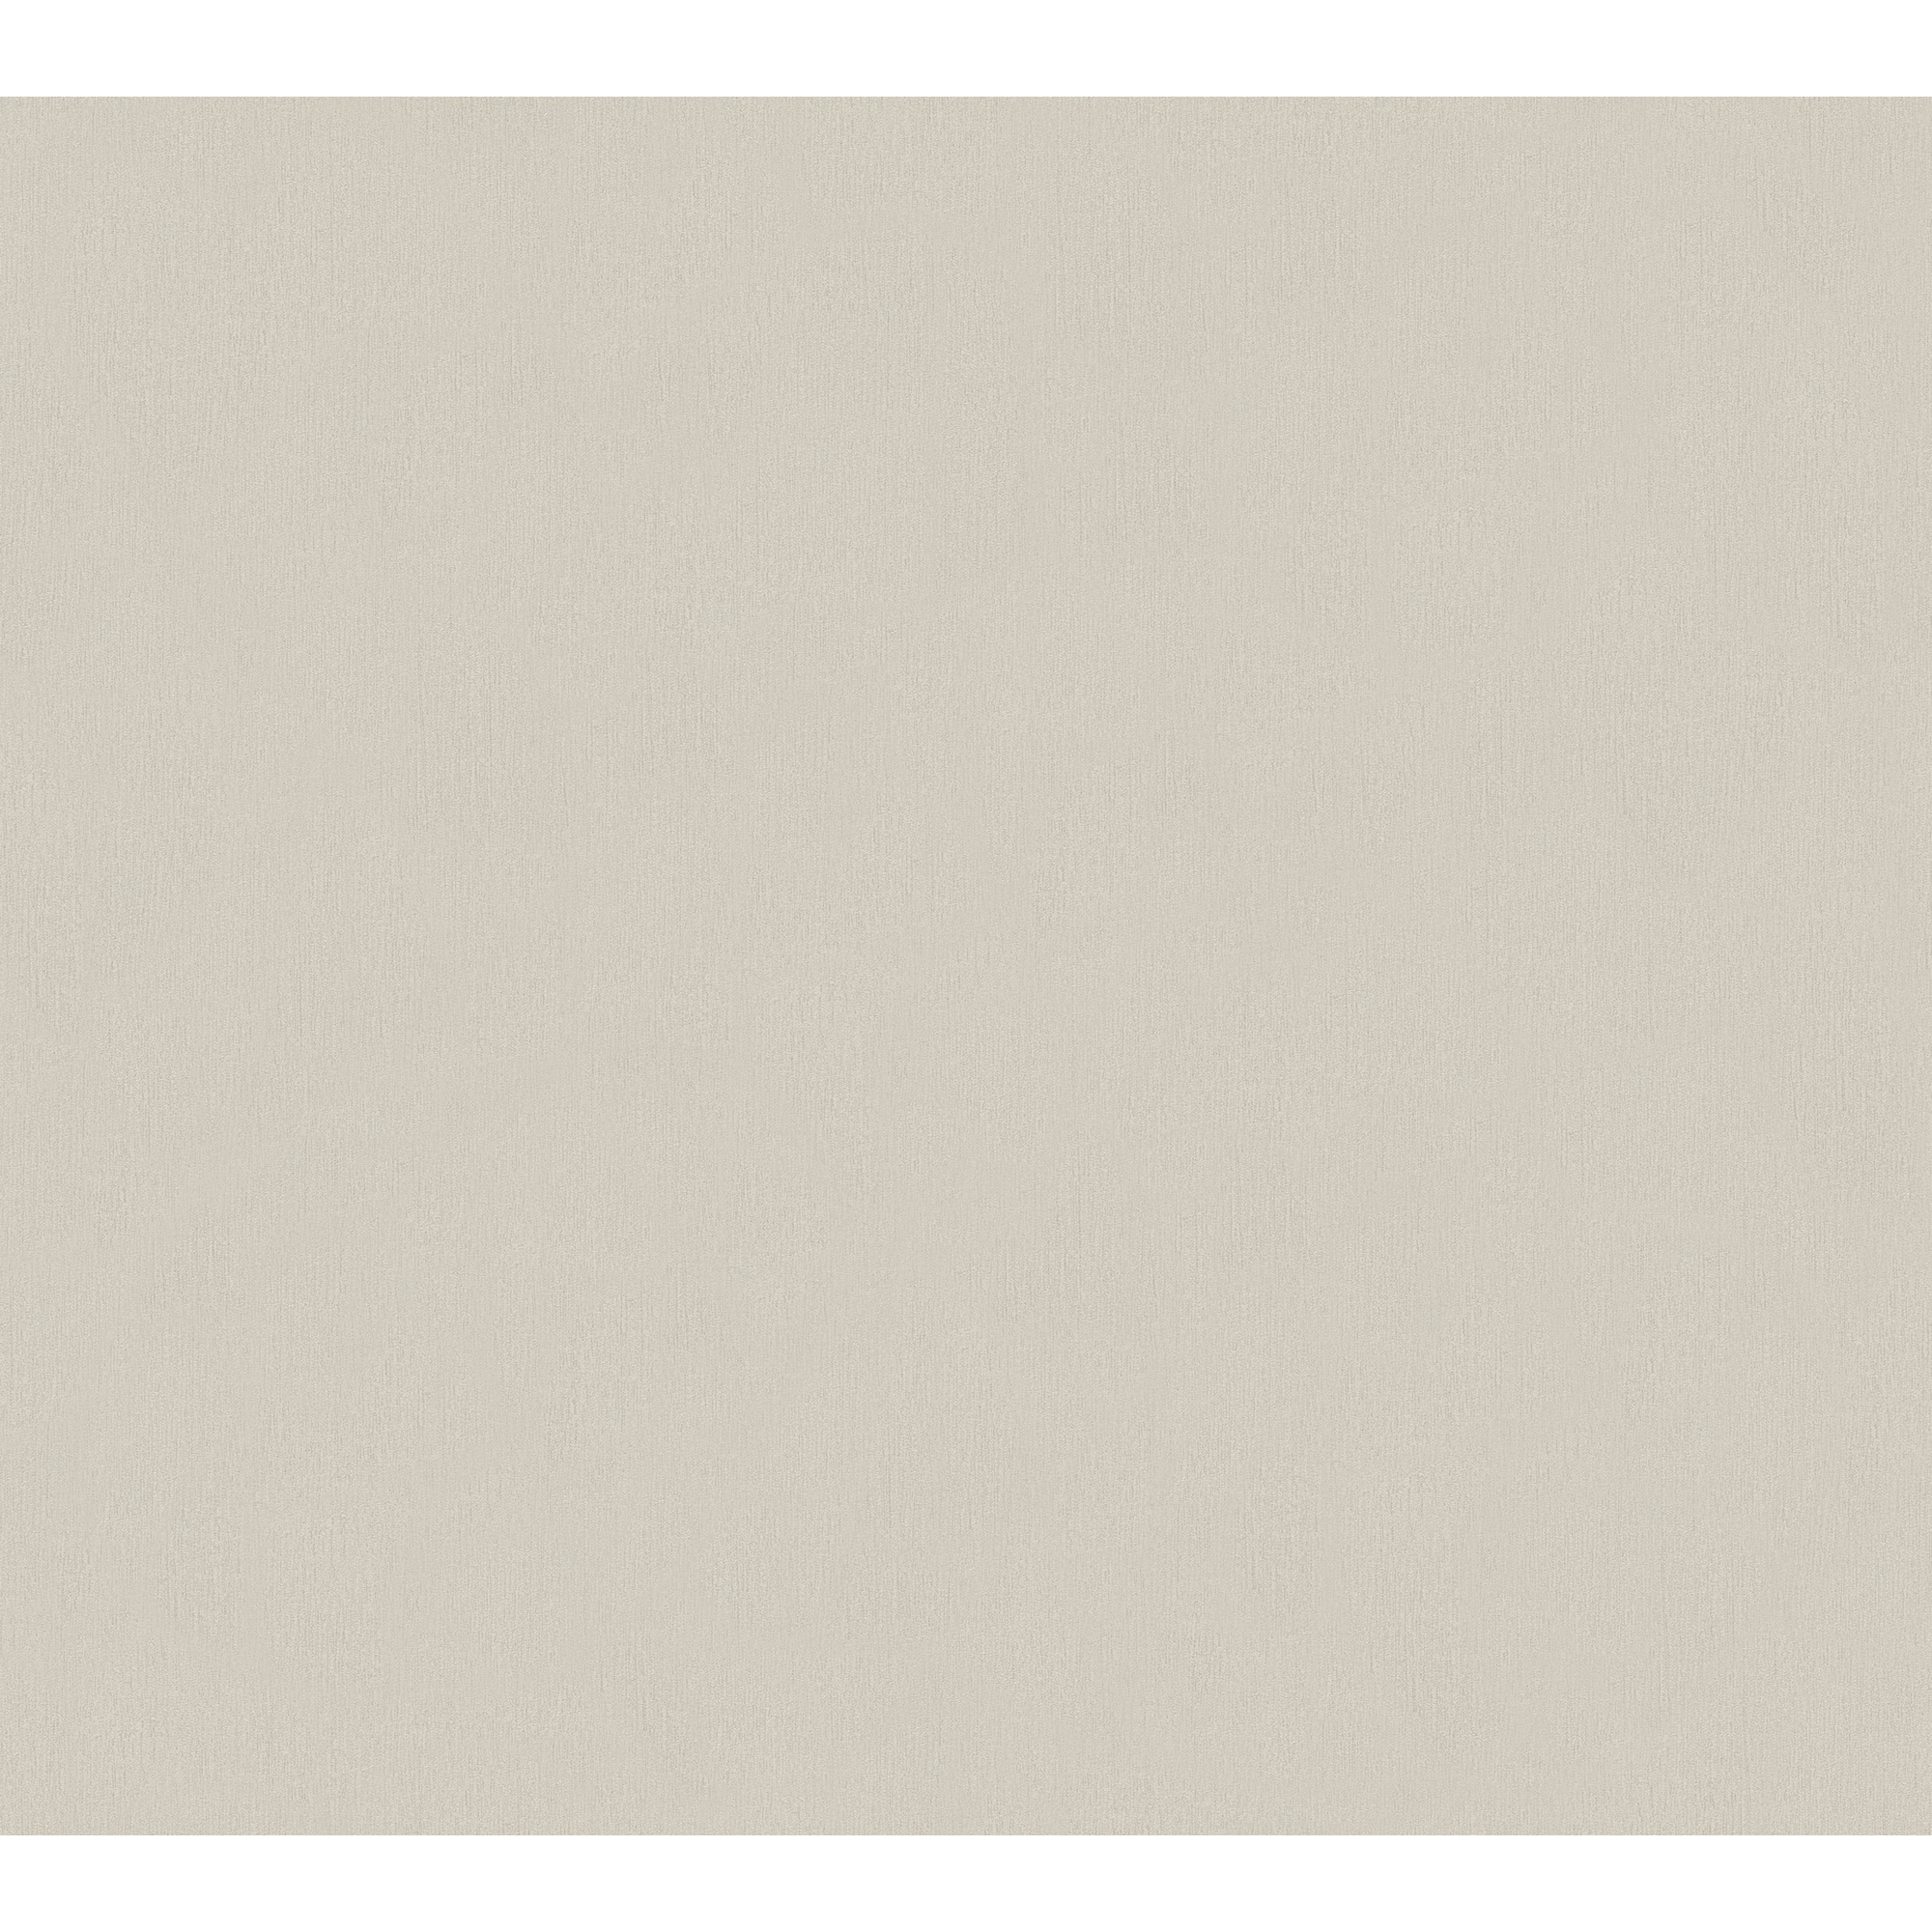 Vliestapete 'Pint Walls' Uni e Oberfläche beige 10,05 x 0,53 m + product picture